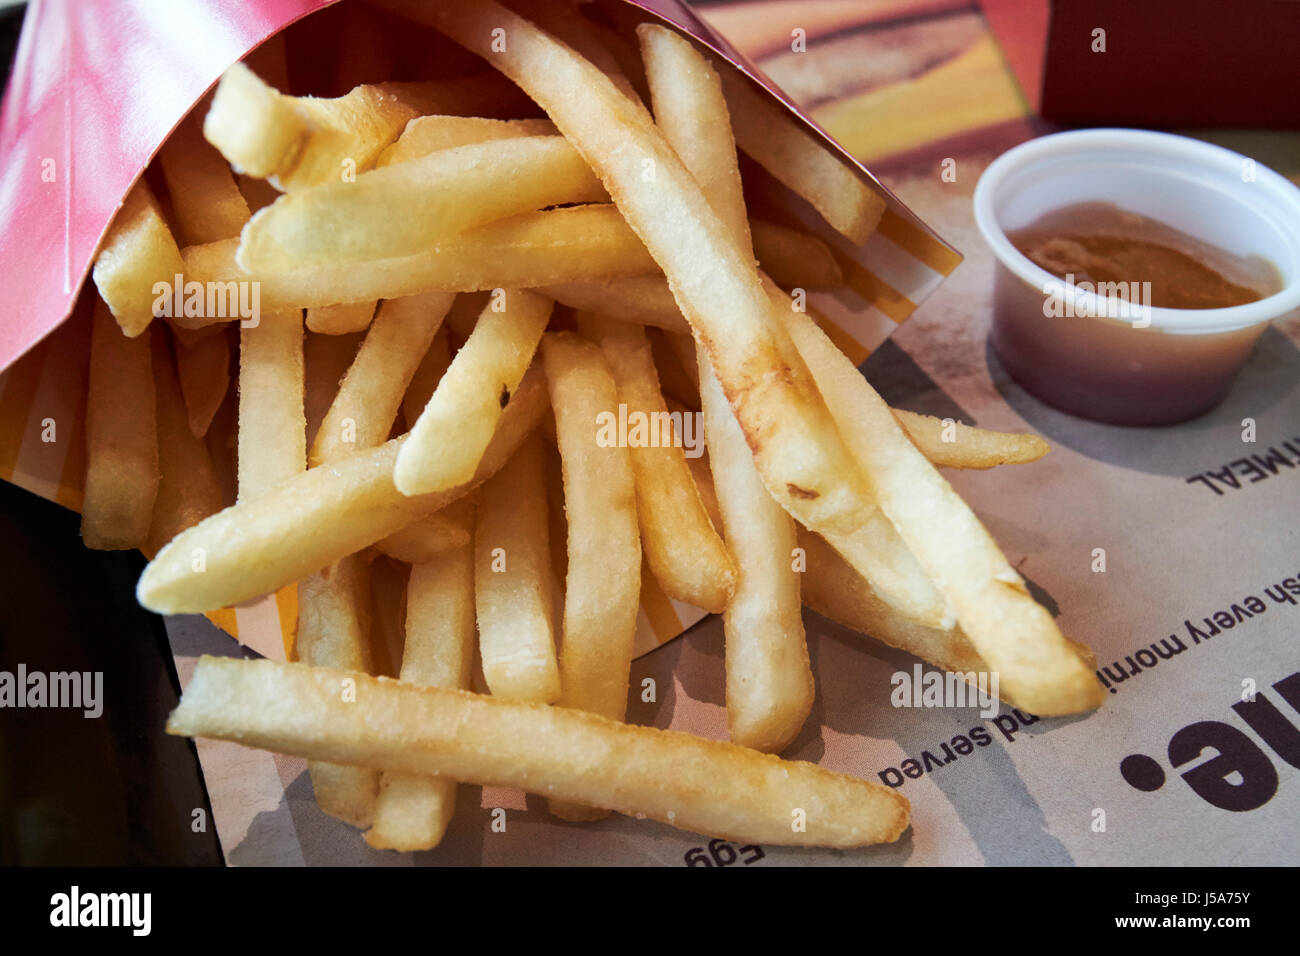 McDonalds fries and sauce usa Stock Photo